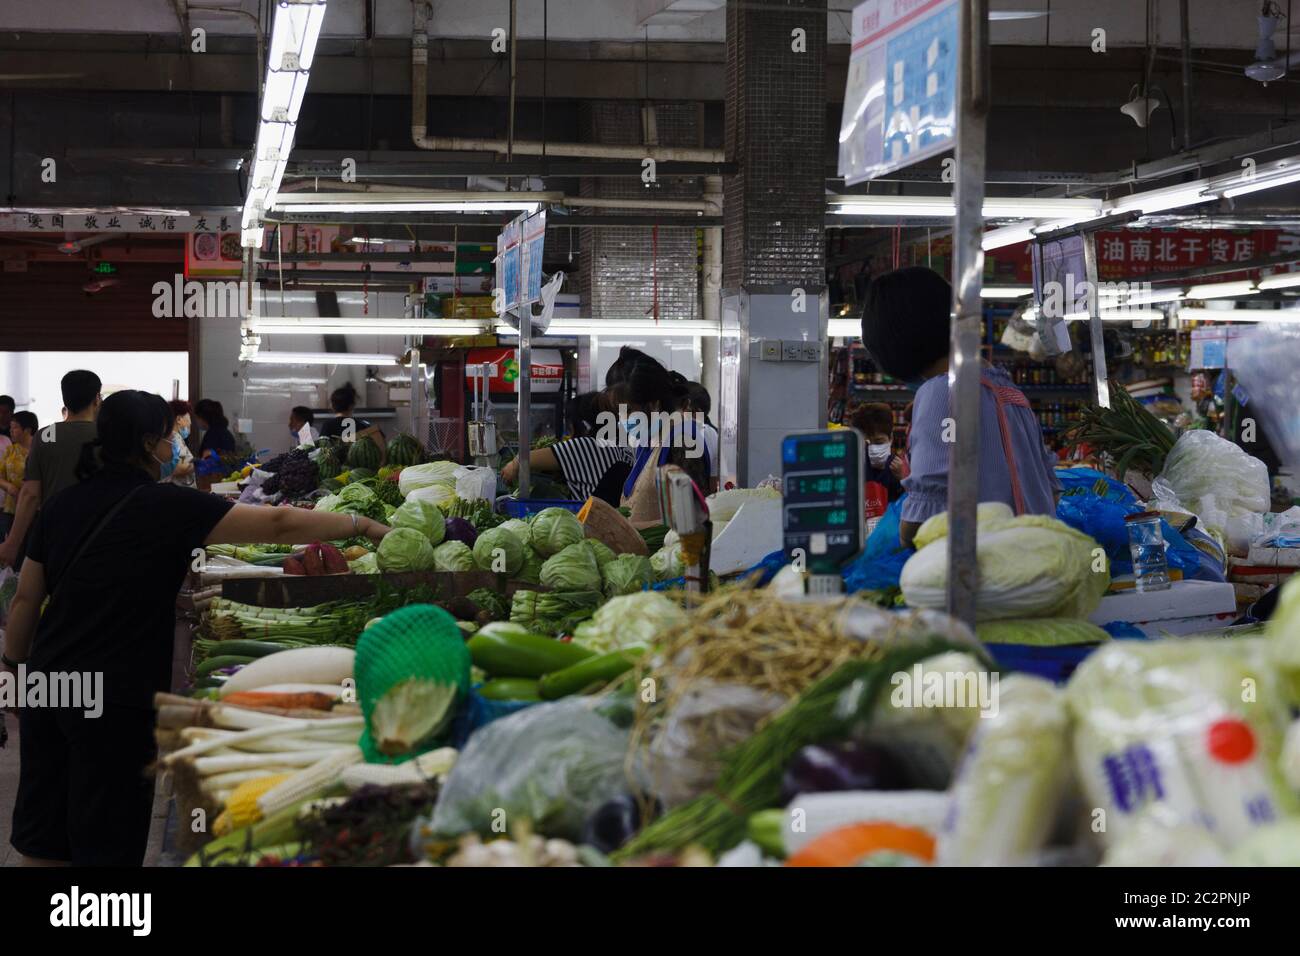 Vegetable stalls at Shanghai food market Stock Photo